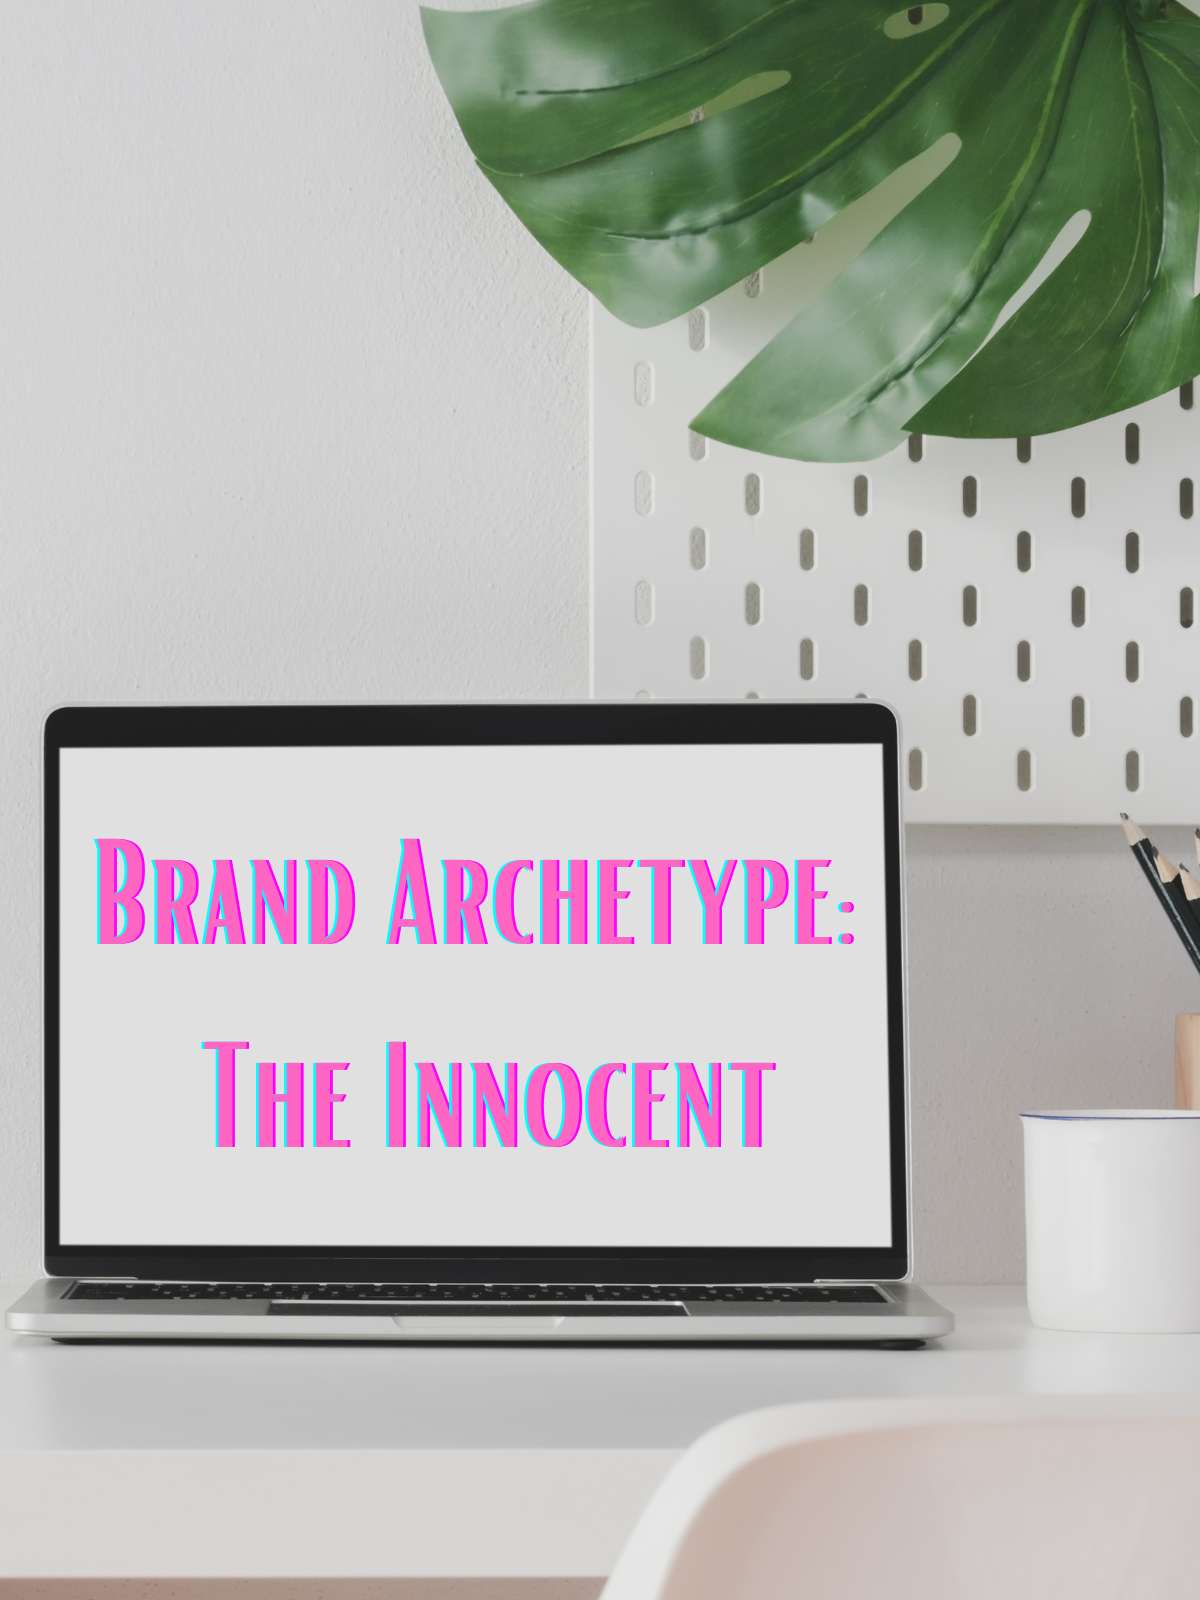 Brand Archetype: The innocent